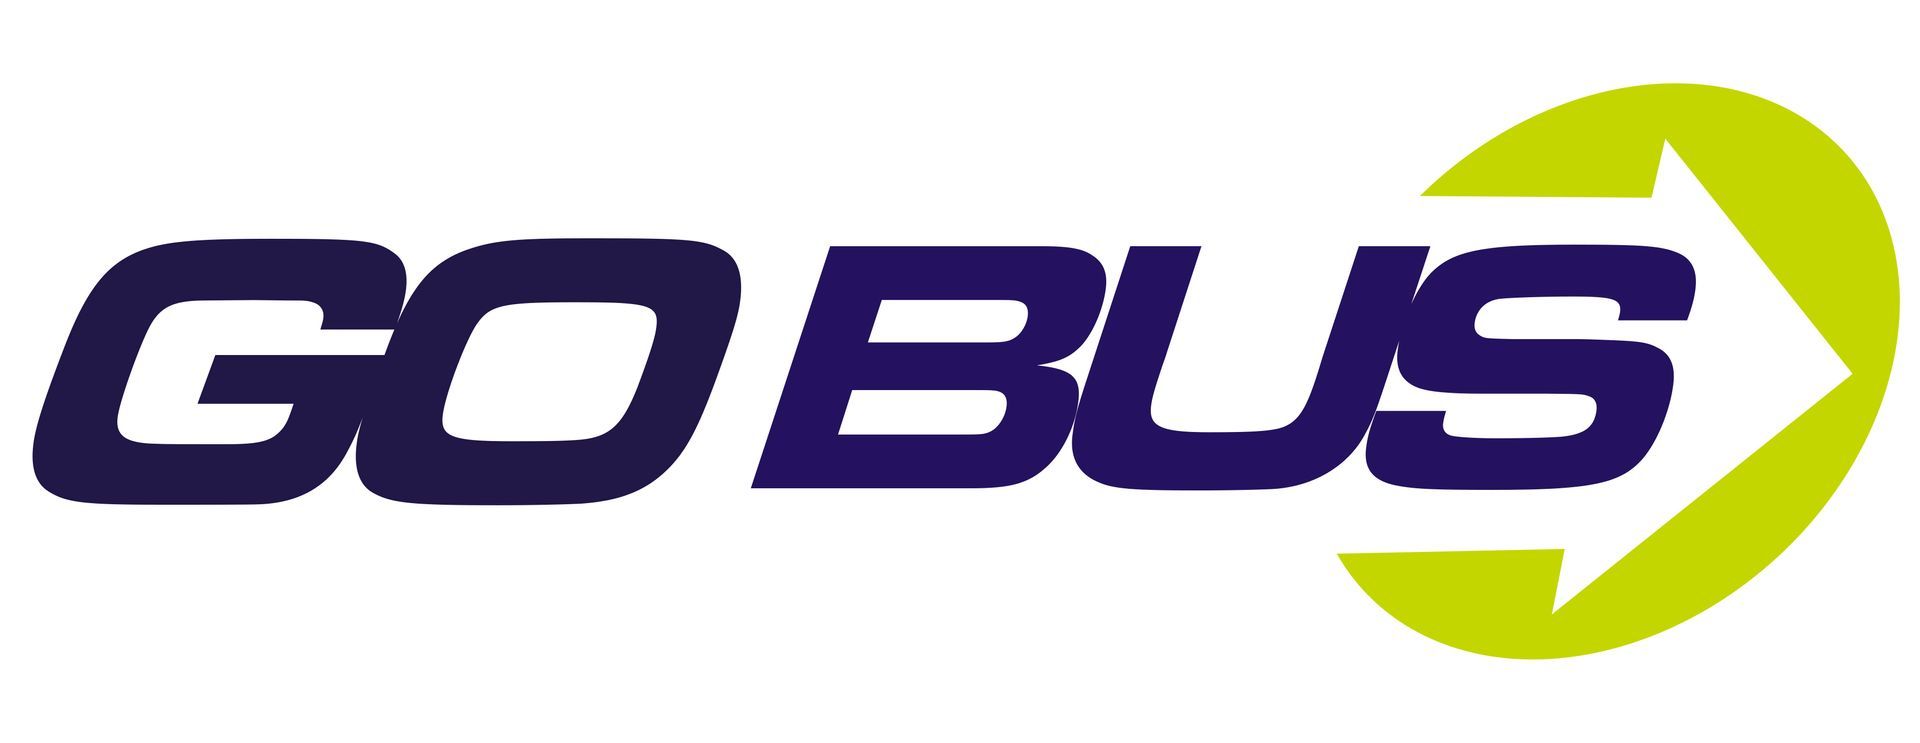 GoBus Public Transportation logo